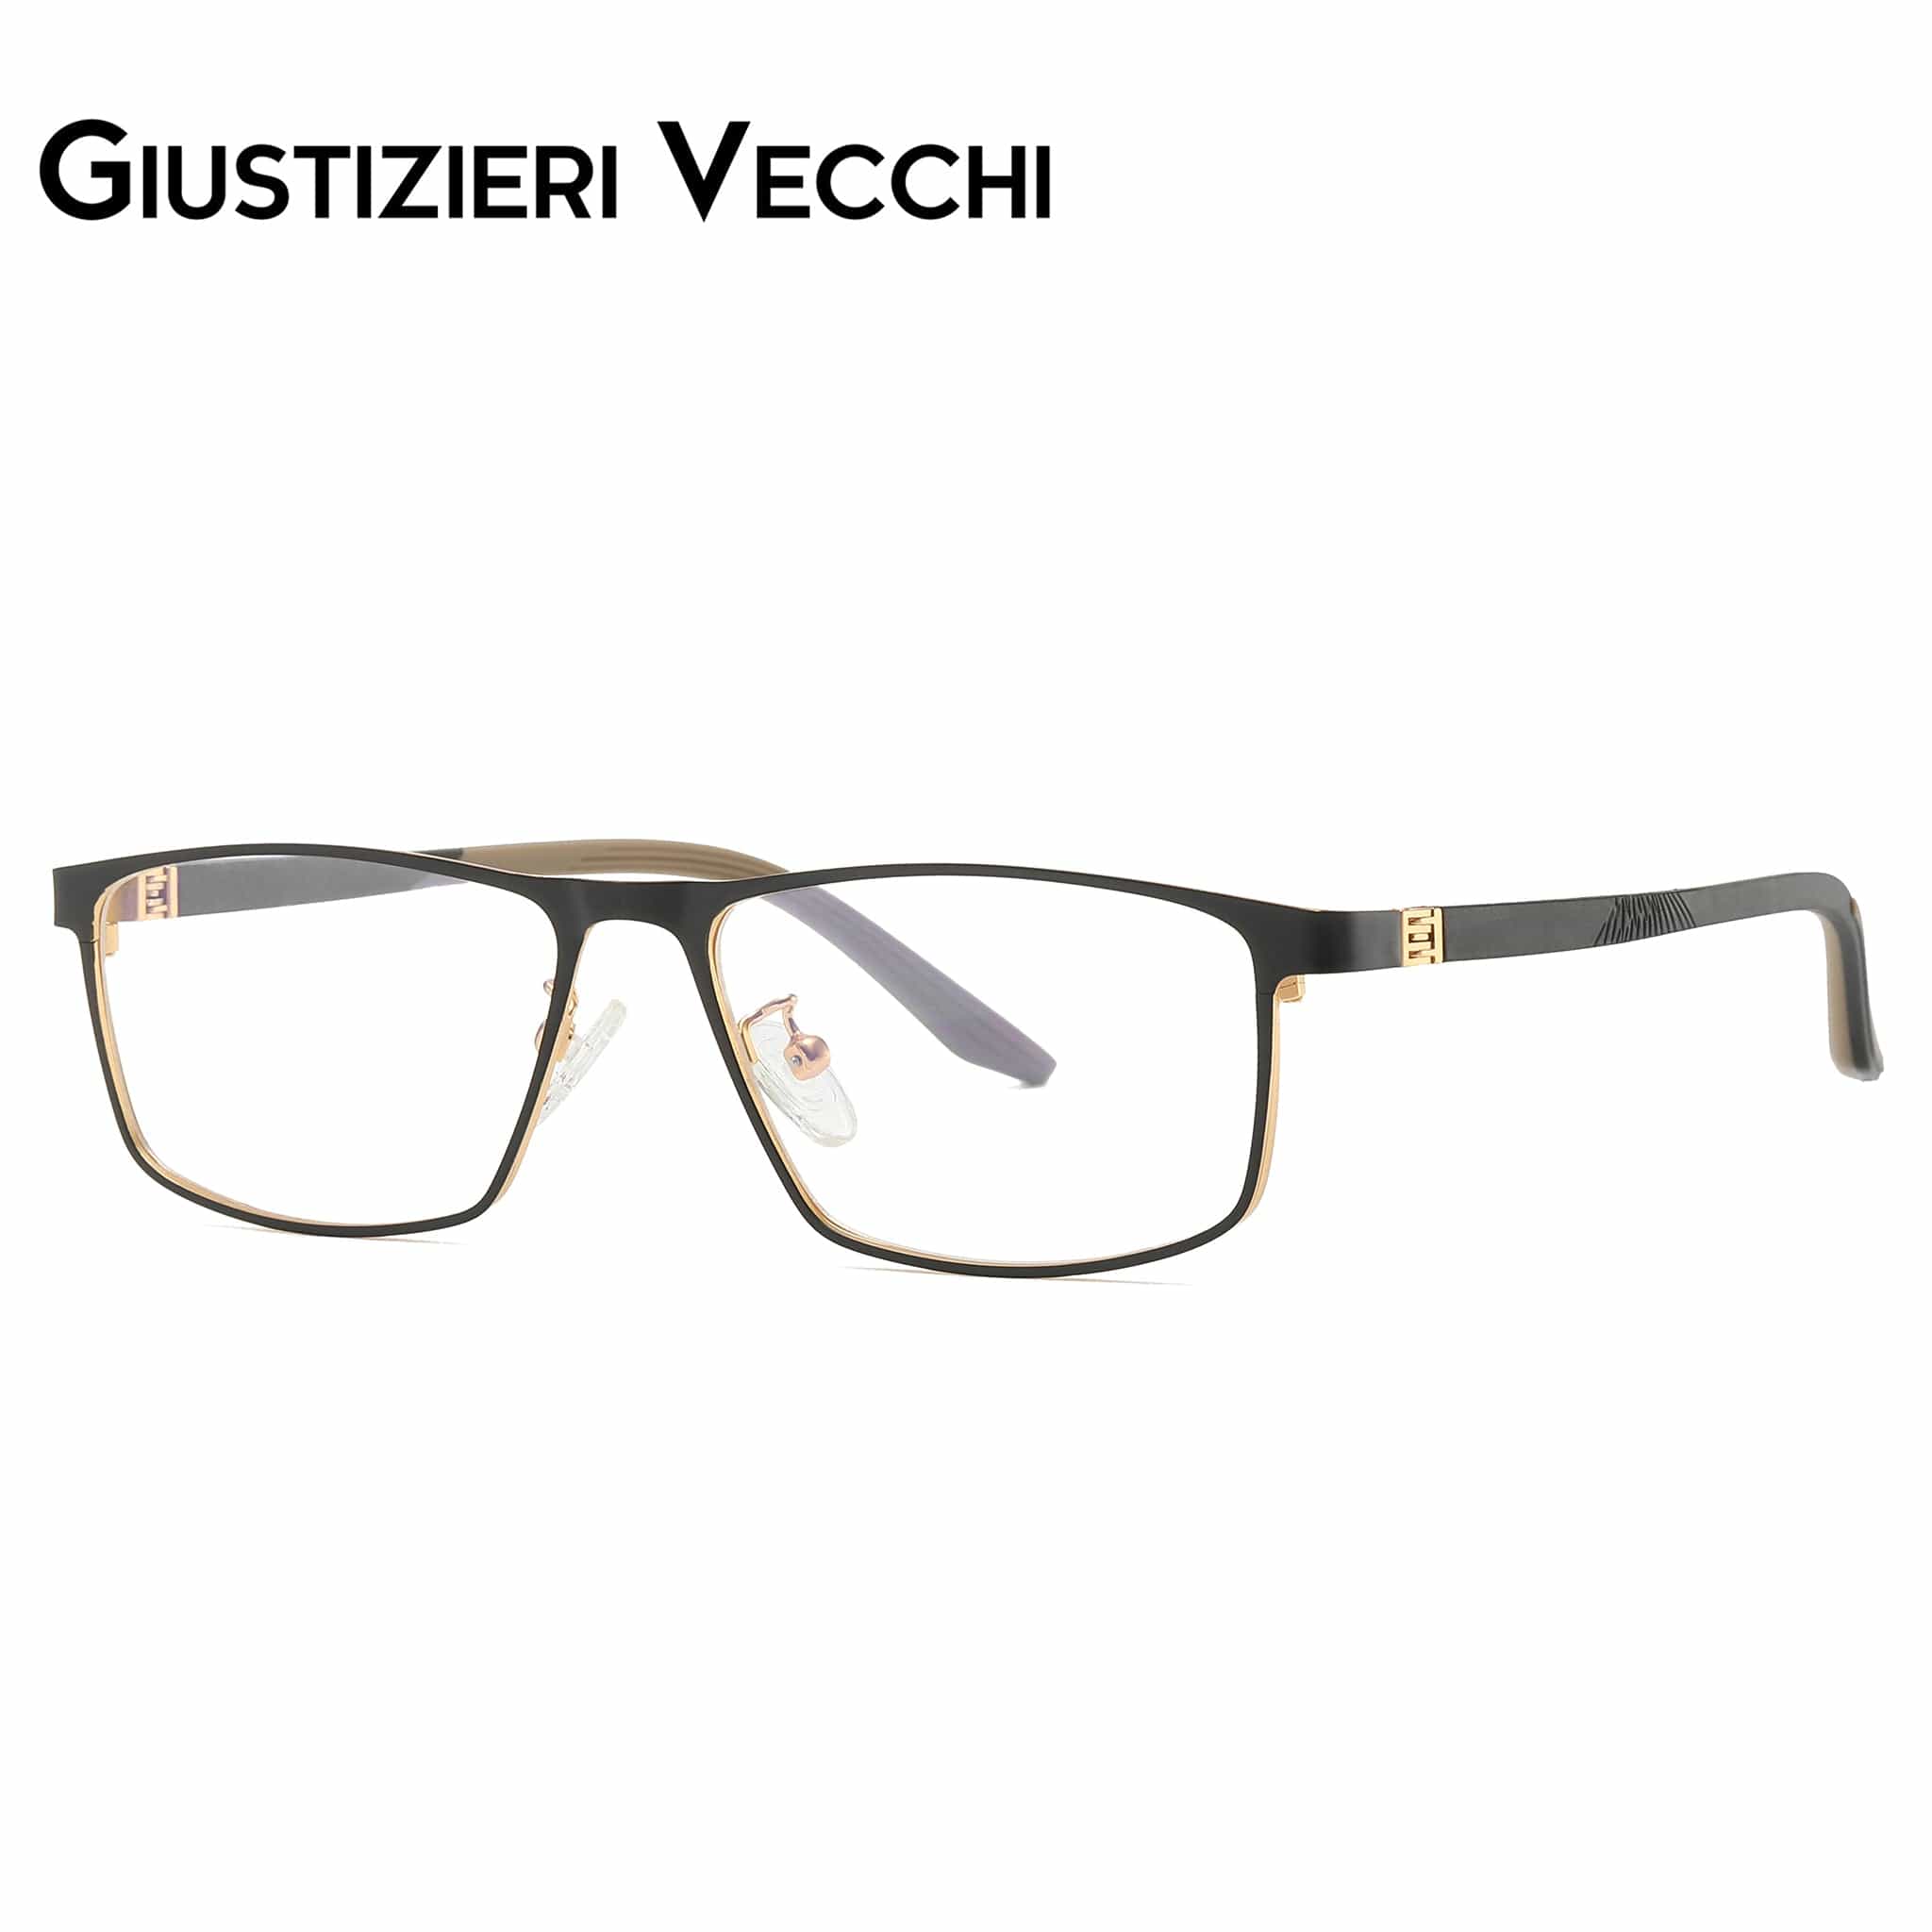 GIUSTIZIERI VECCHI Eyeglasses IceStorm Duo